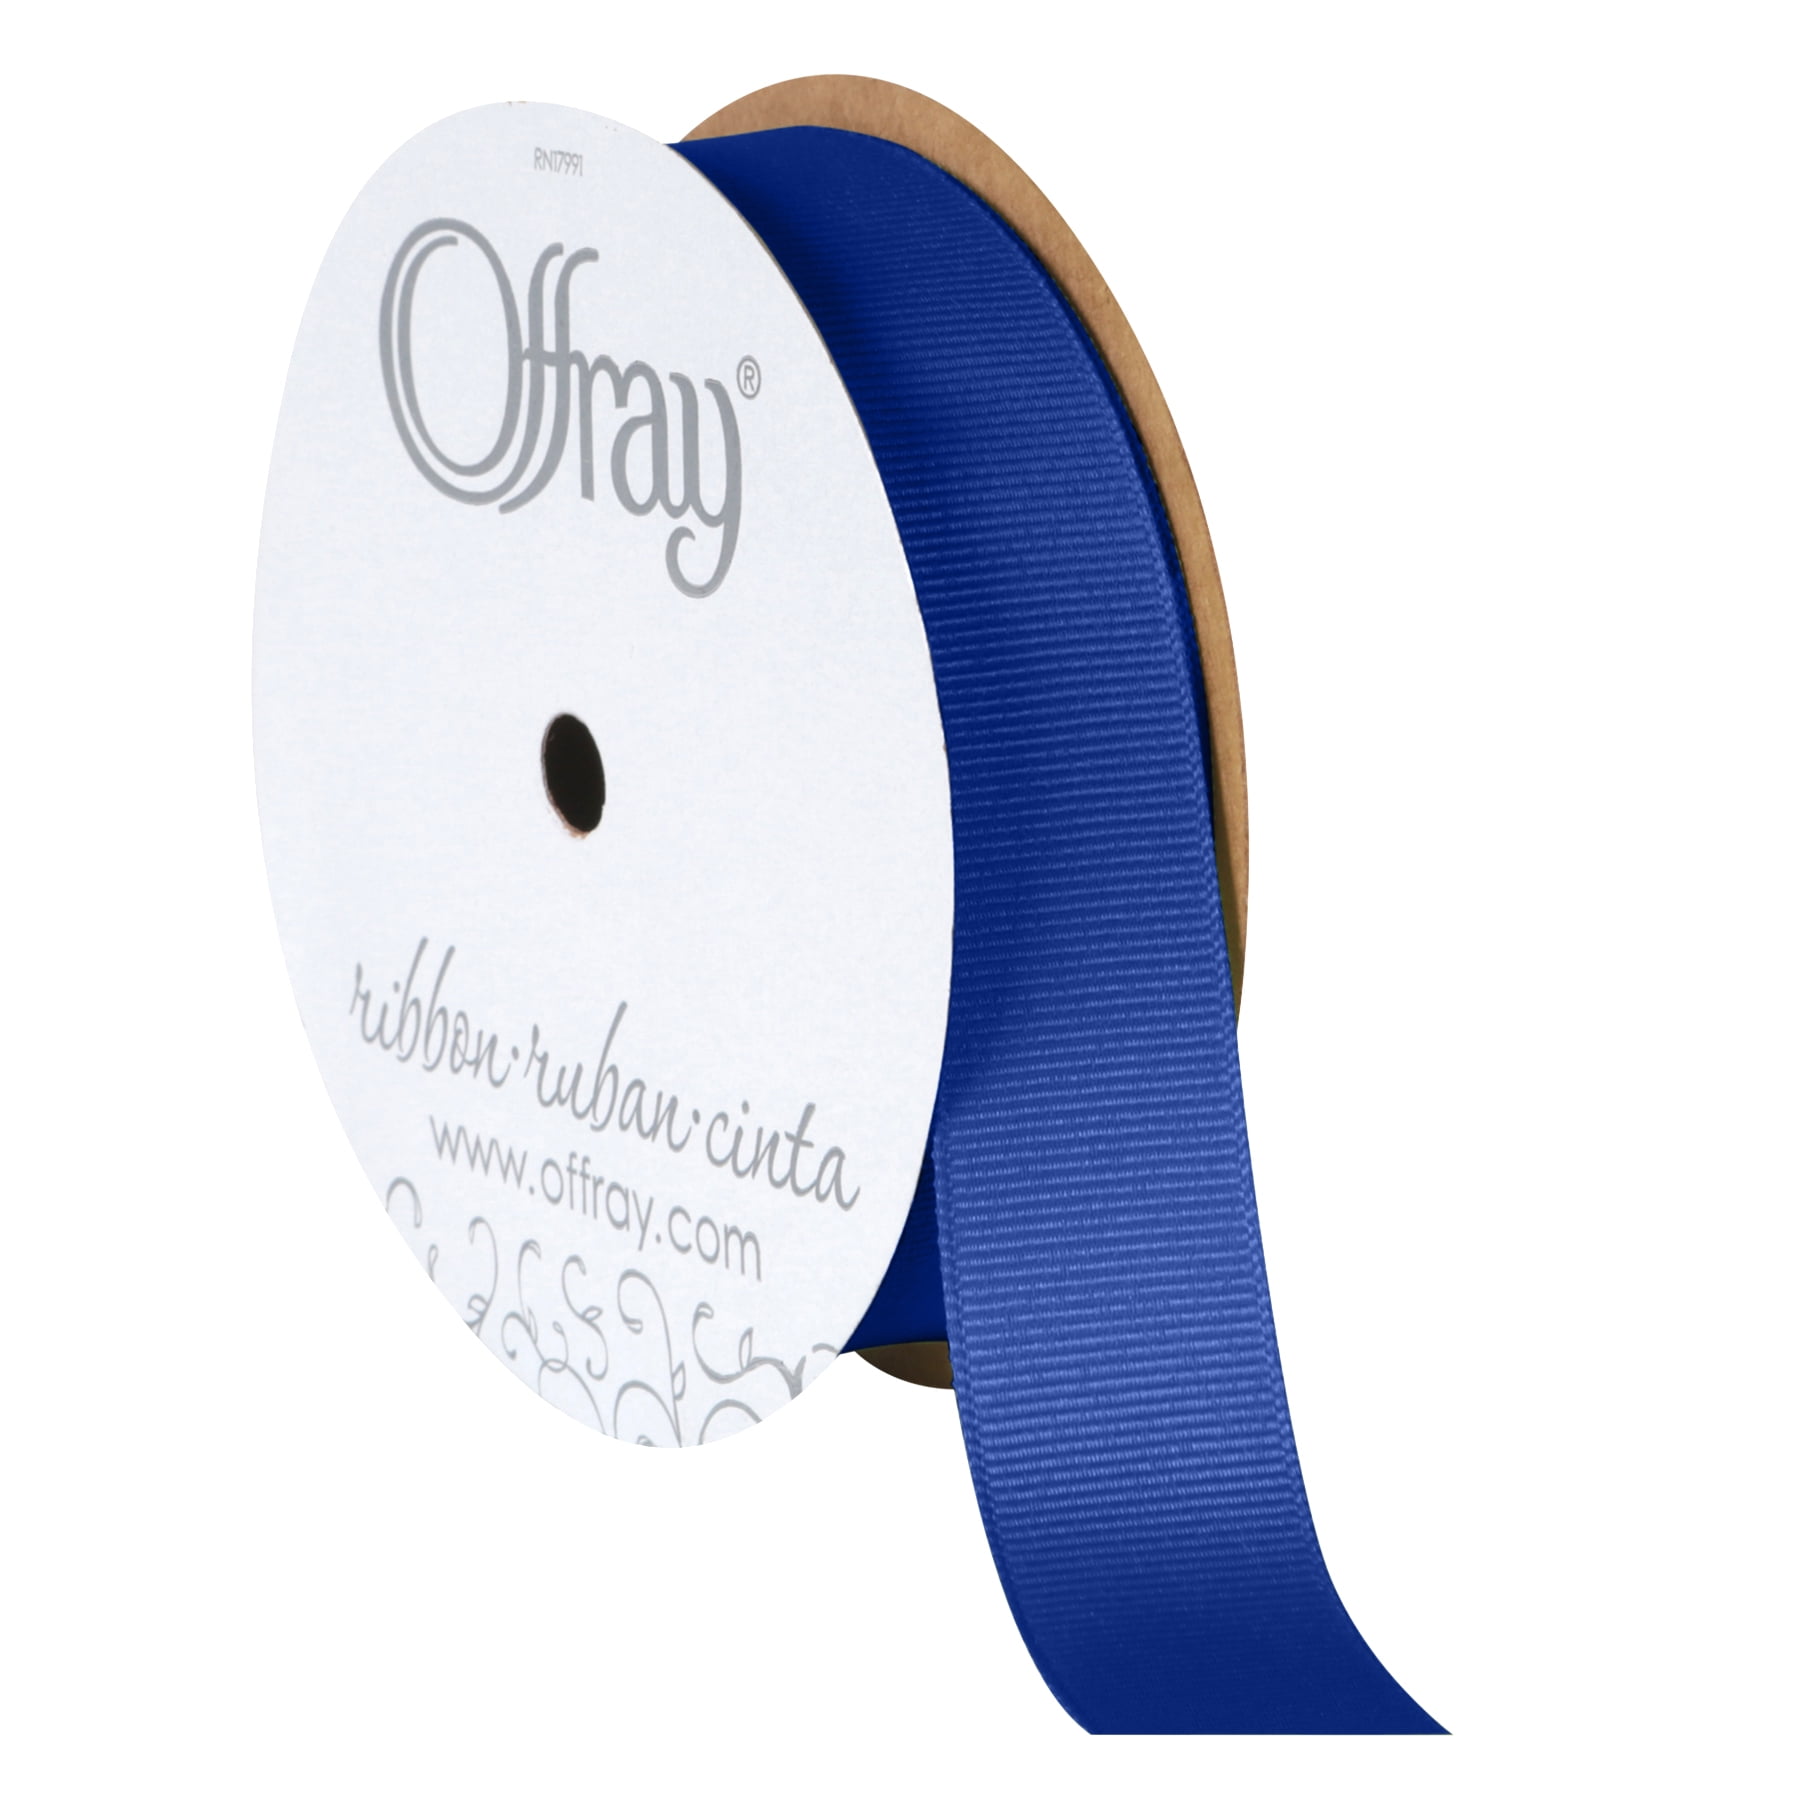 Offray Ribbon, Century Blue 7/8 inch Grosgrain Polyester Ribbon, 18 feet